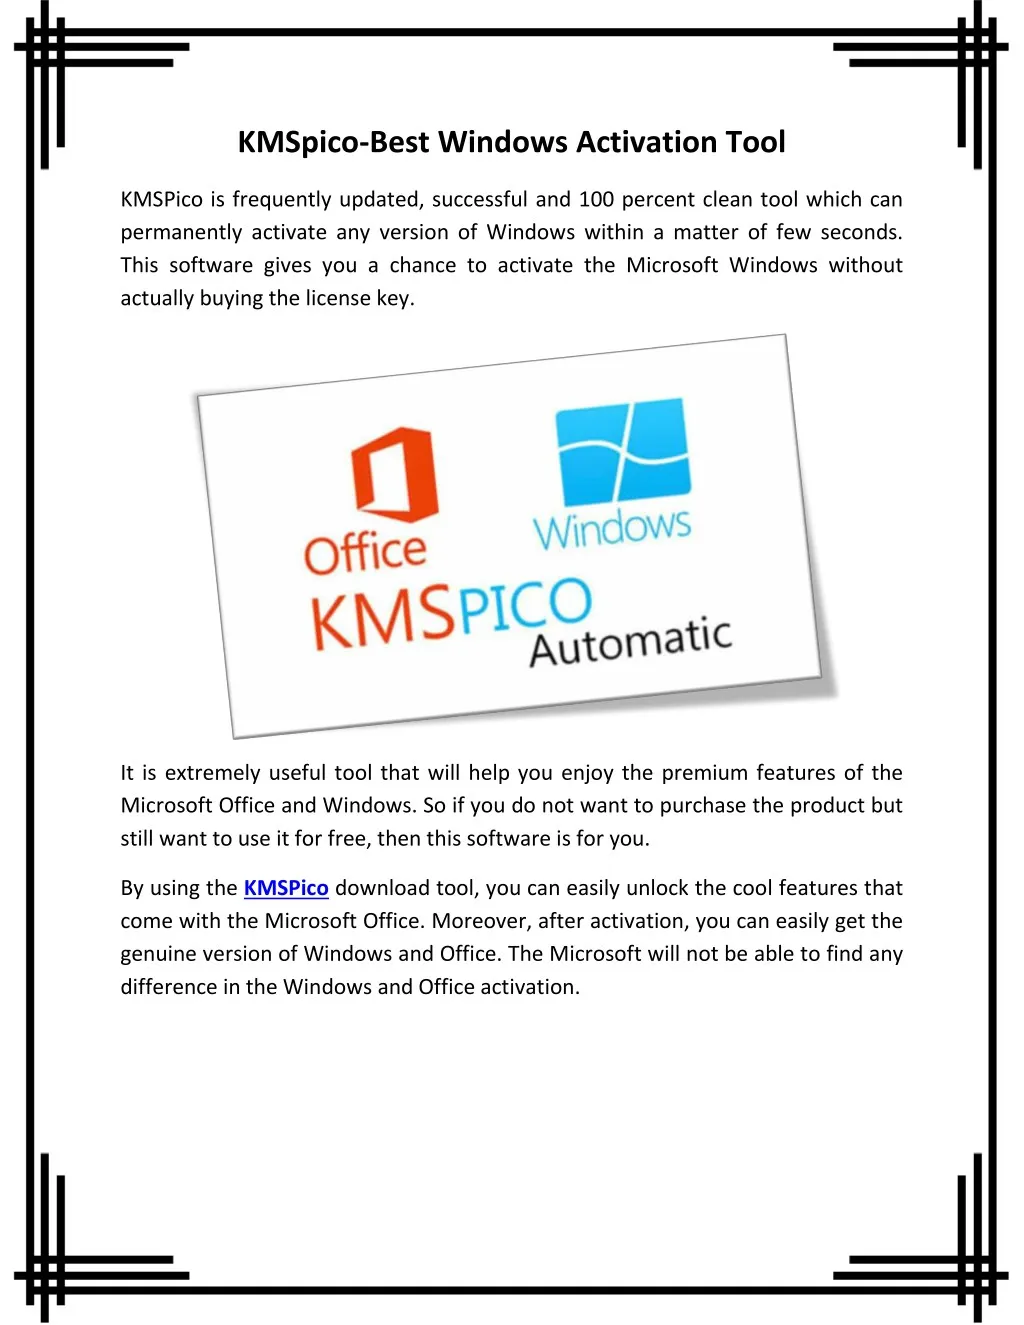 kmspico best windows activation tool